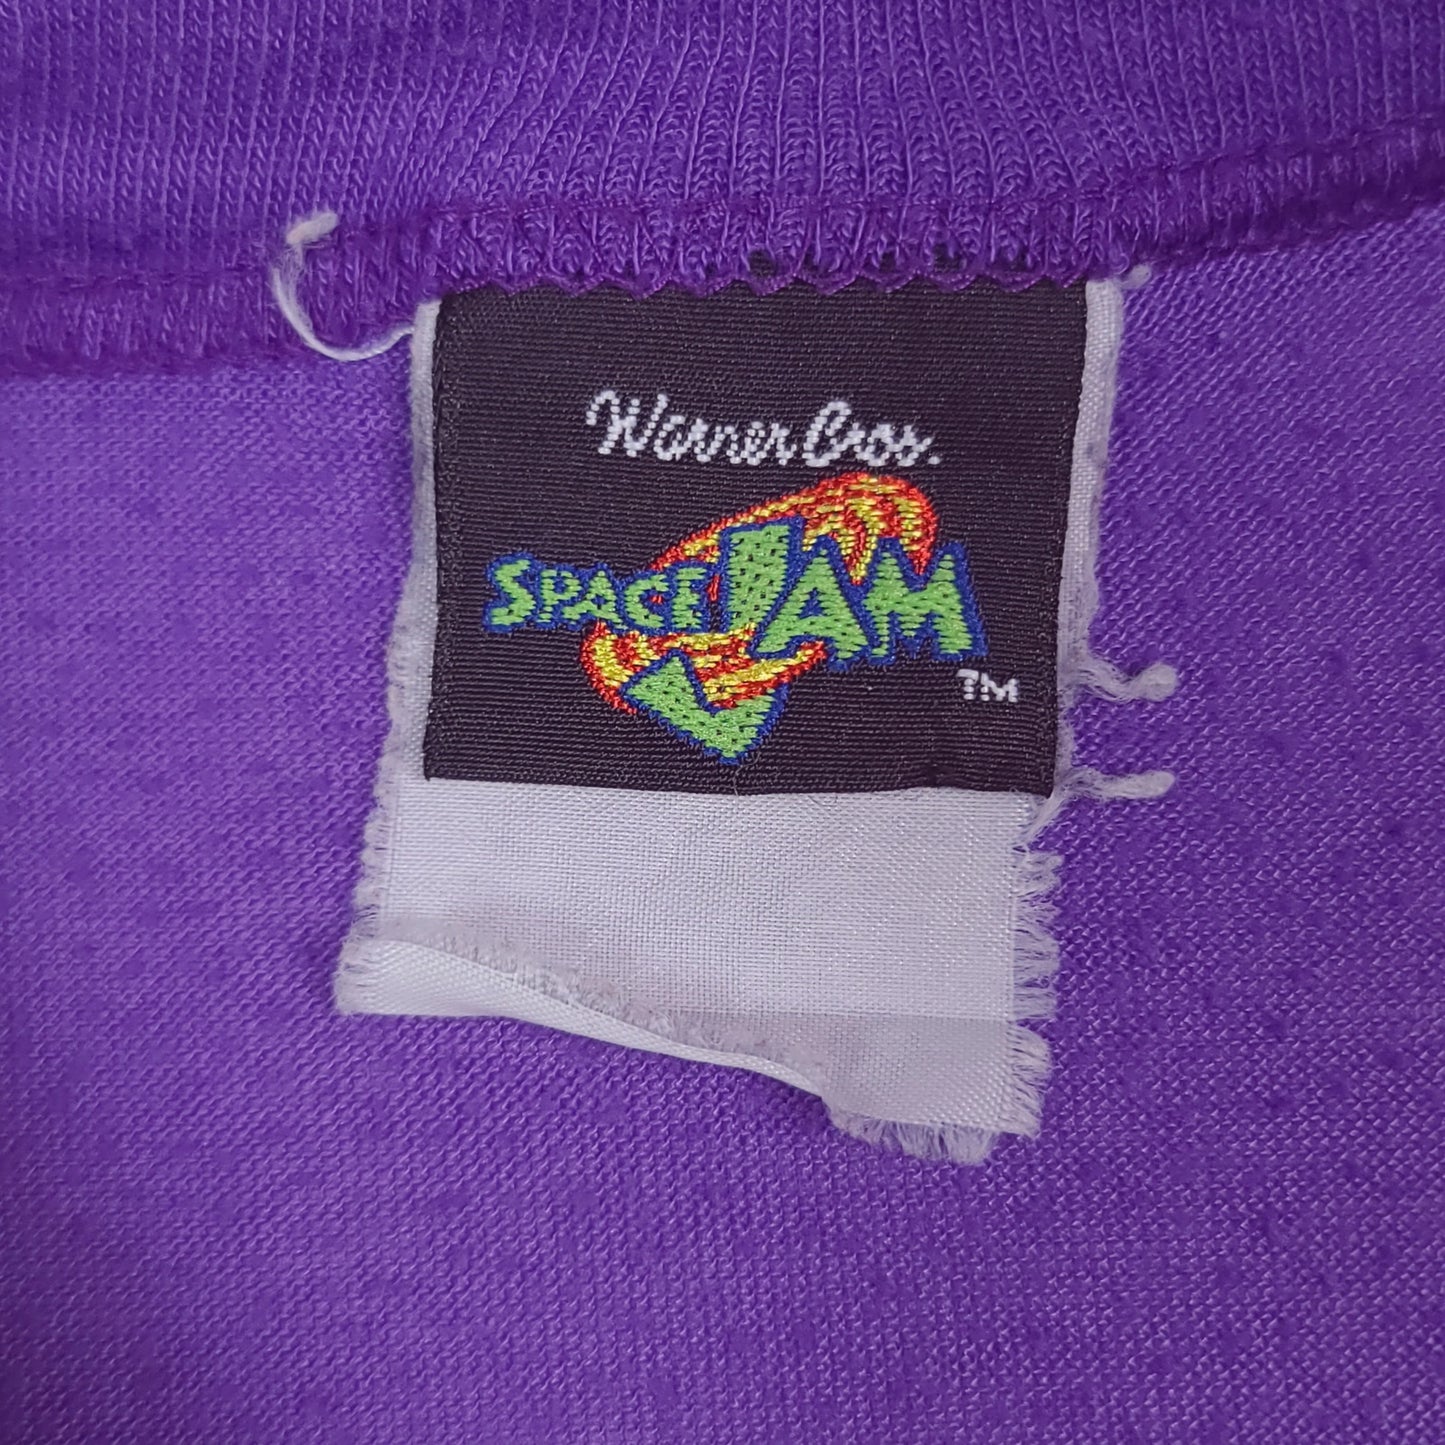 Space Jam Lola & Bugs Bunny Purple T-Shirt